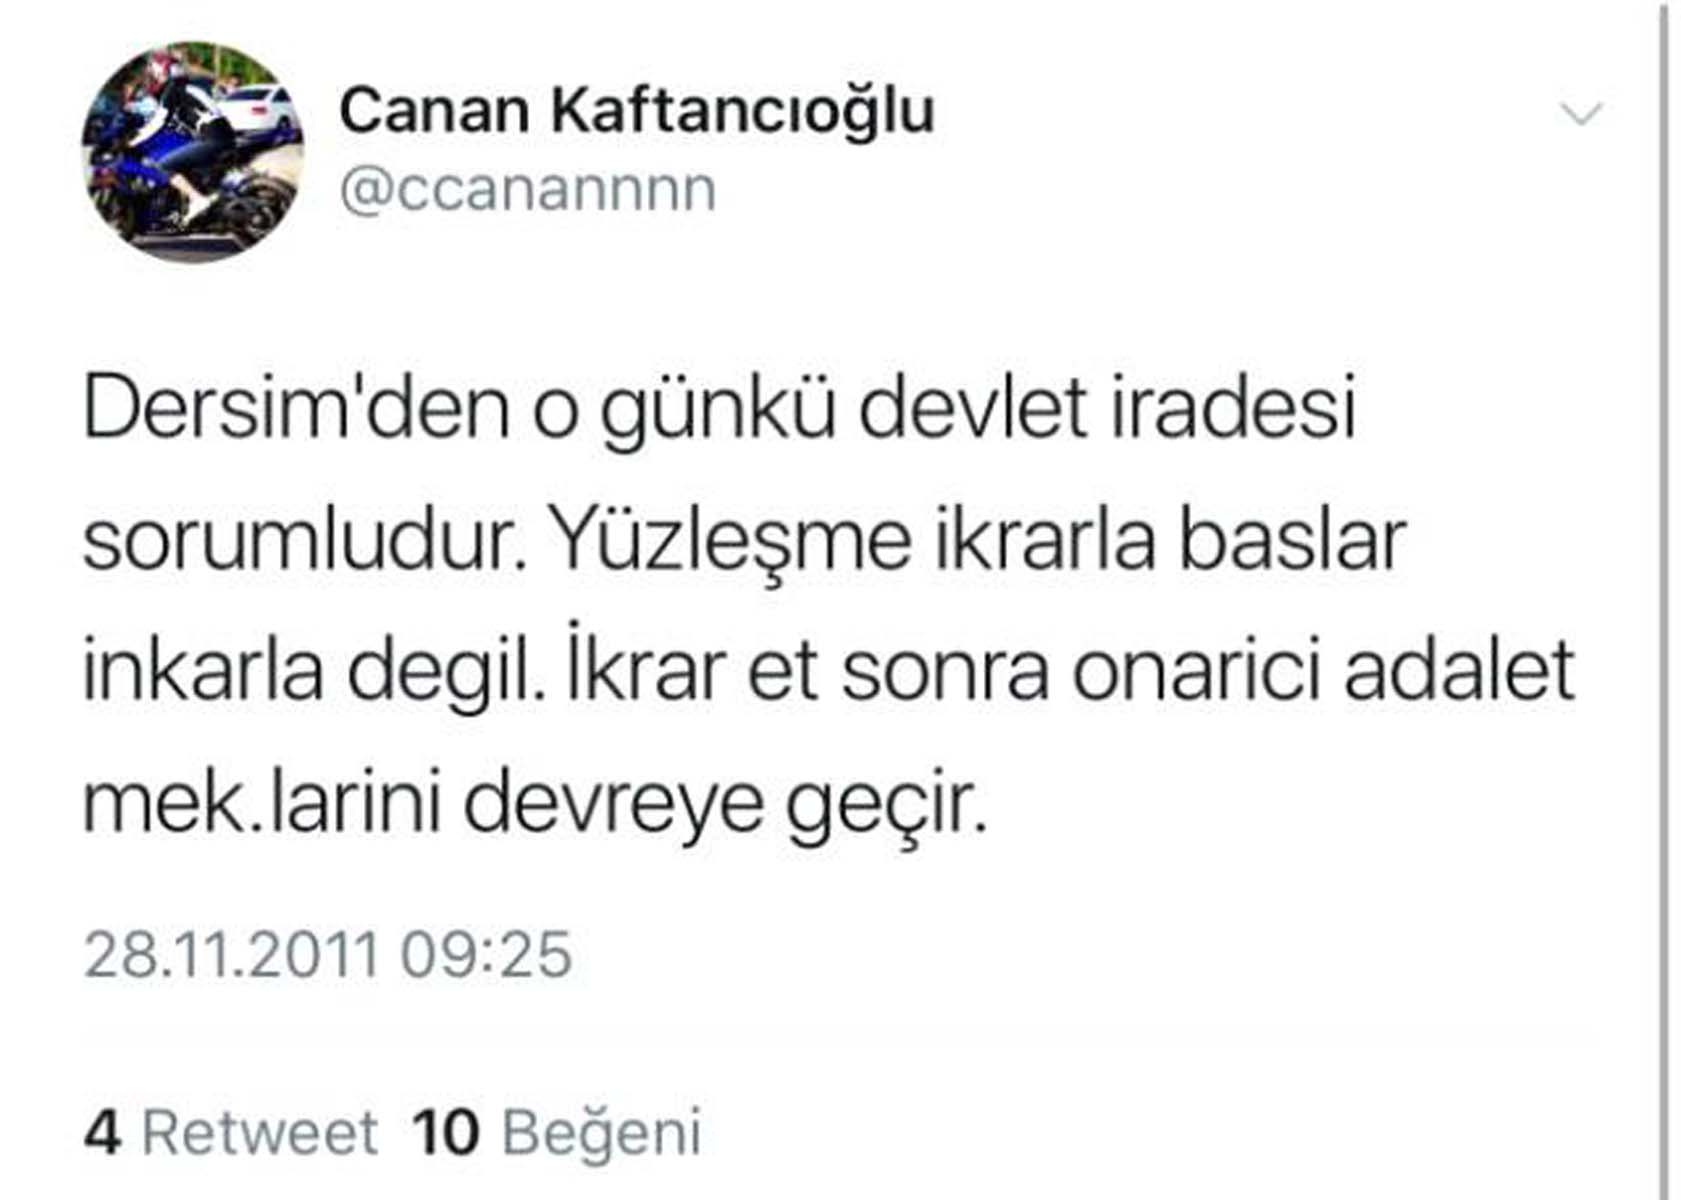 Son dakika! CHP'li Canan Kaftancıoğlu'nun siyasi parti üyeliği düşürüldü!